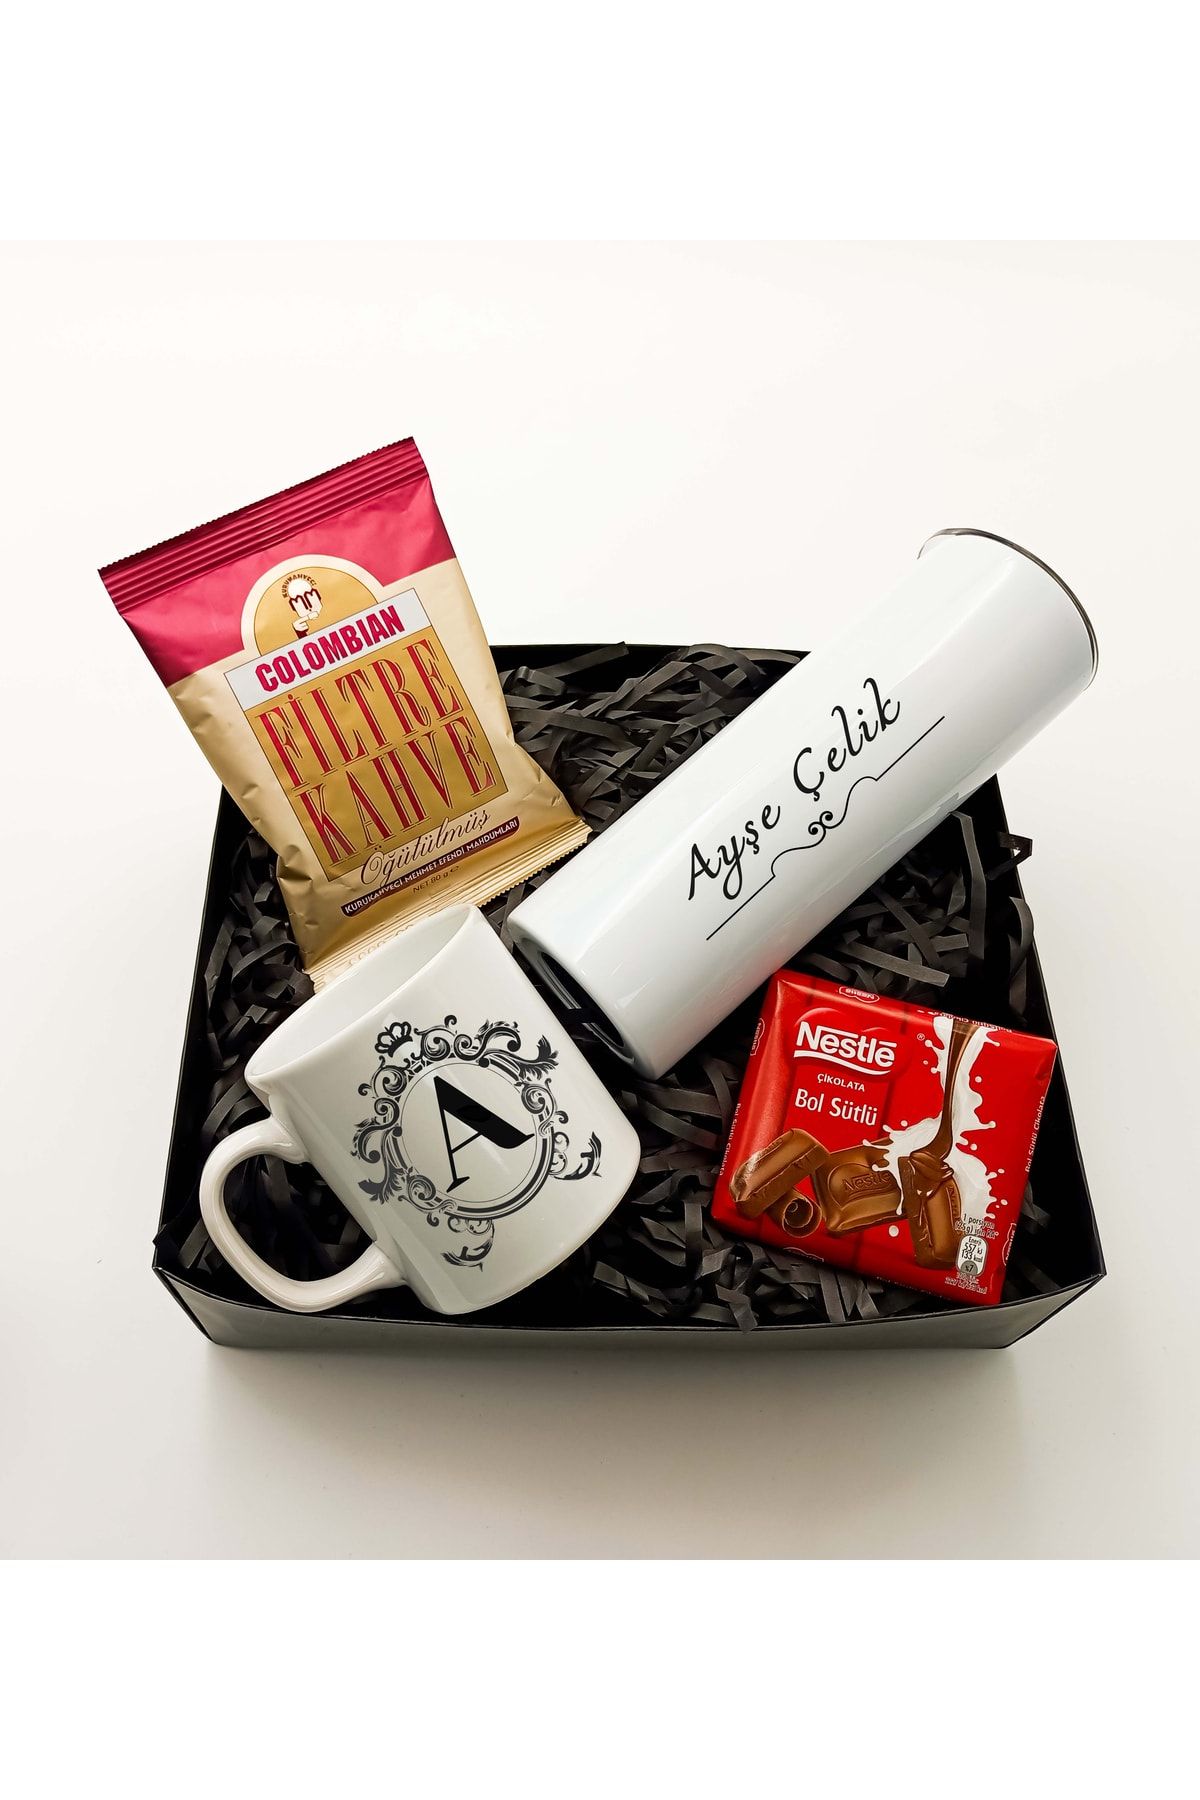 ASGIFT COMPANY Beyaz Kupa & Beyaz Çelik Termos & Columbian Filtre Kahve & Nestle Çikolata Hediye Seti